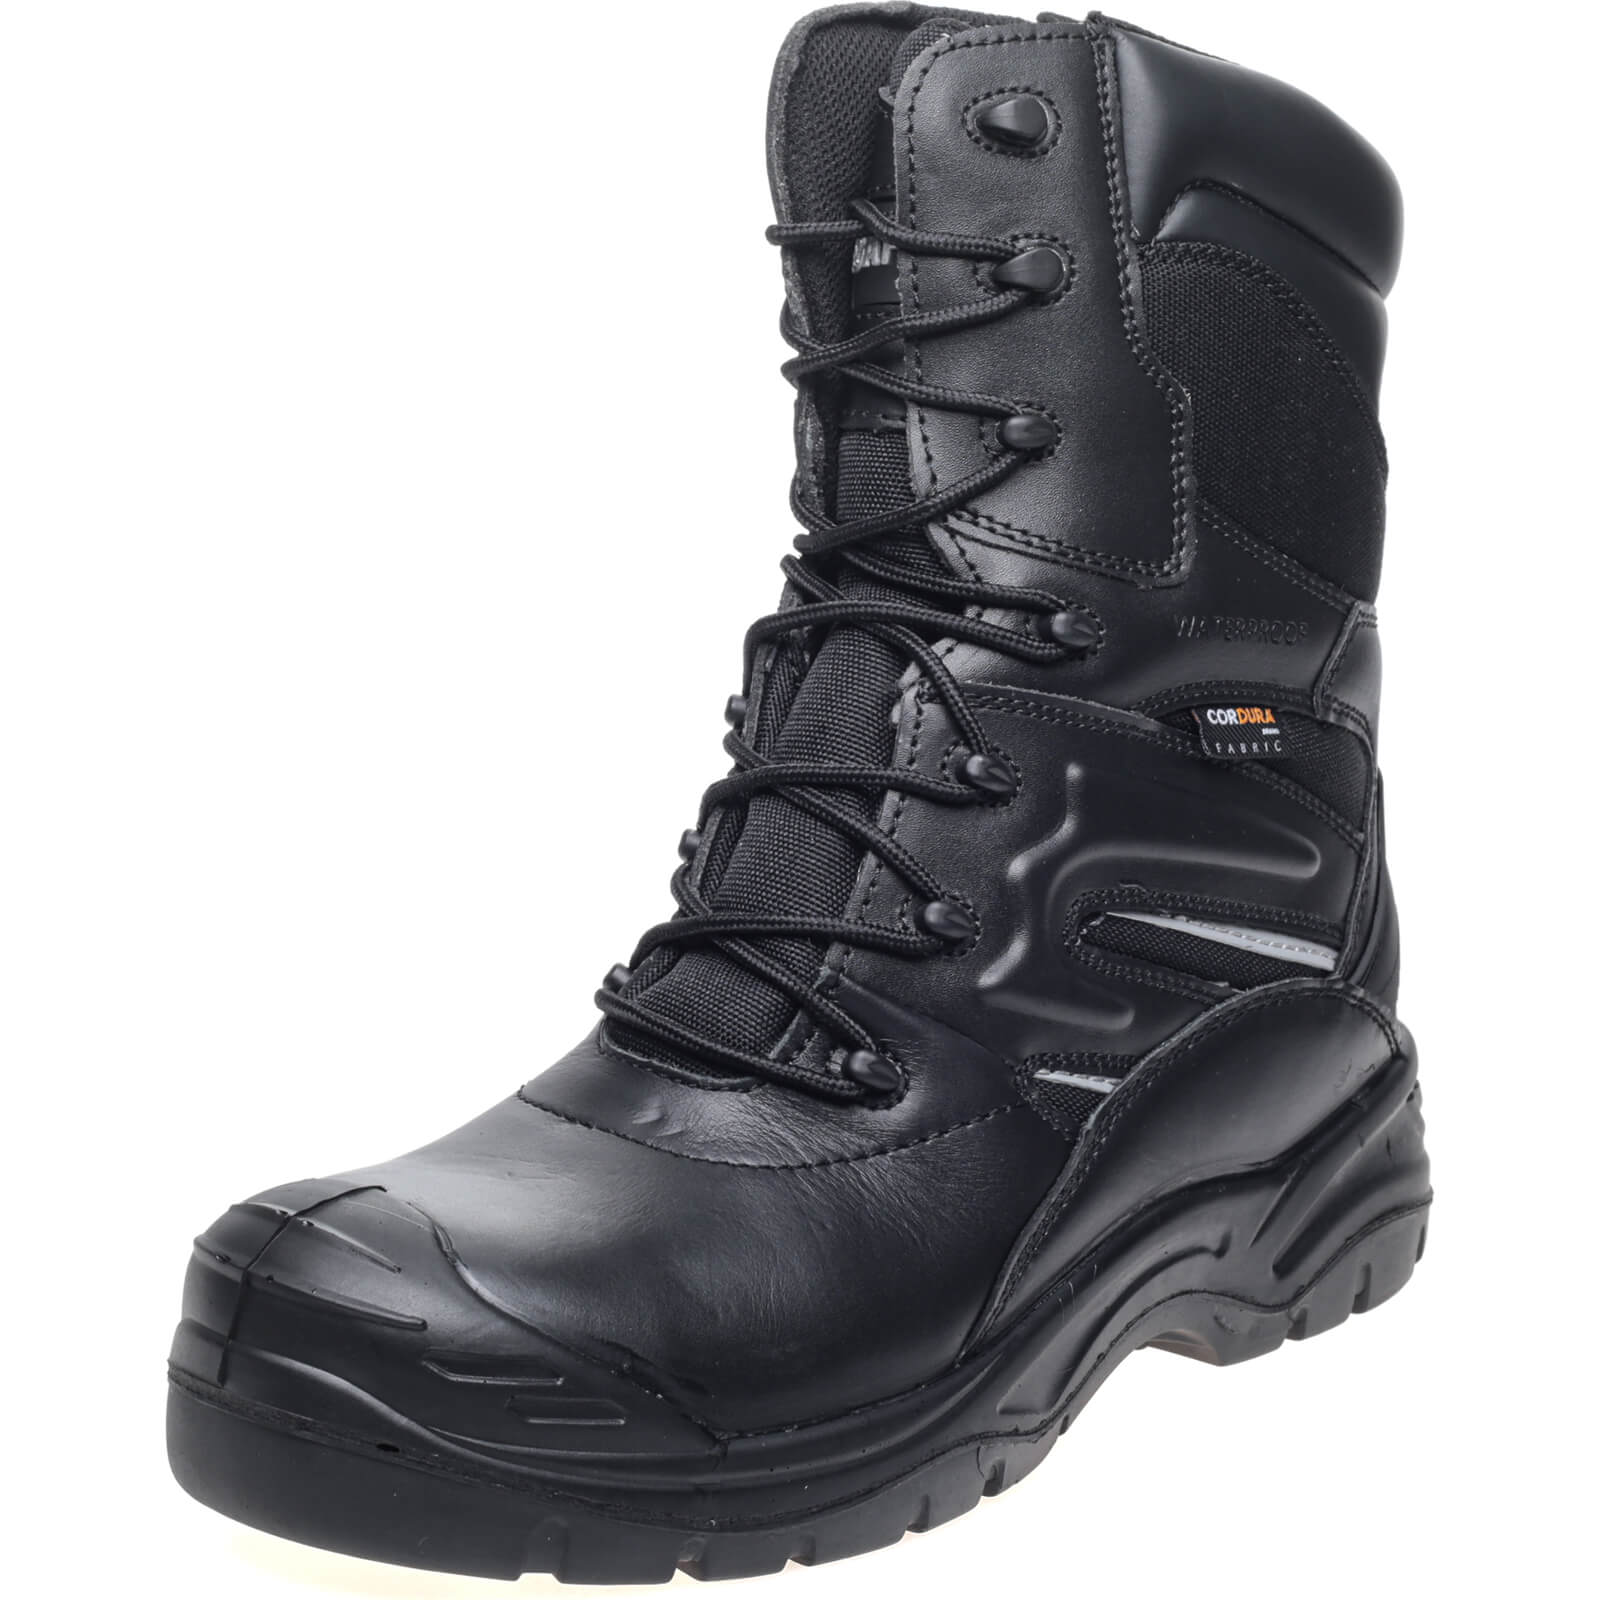 Image of Apache COMBAT Non Metallic High Leg Safety Boots Black Size 5